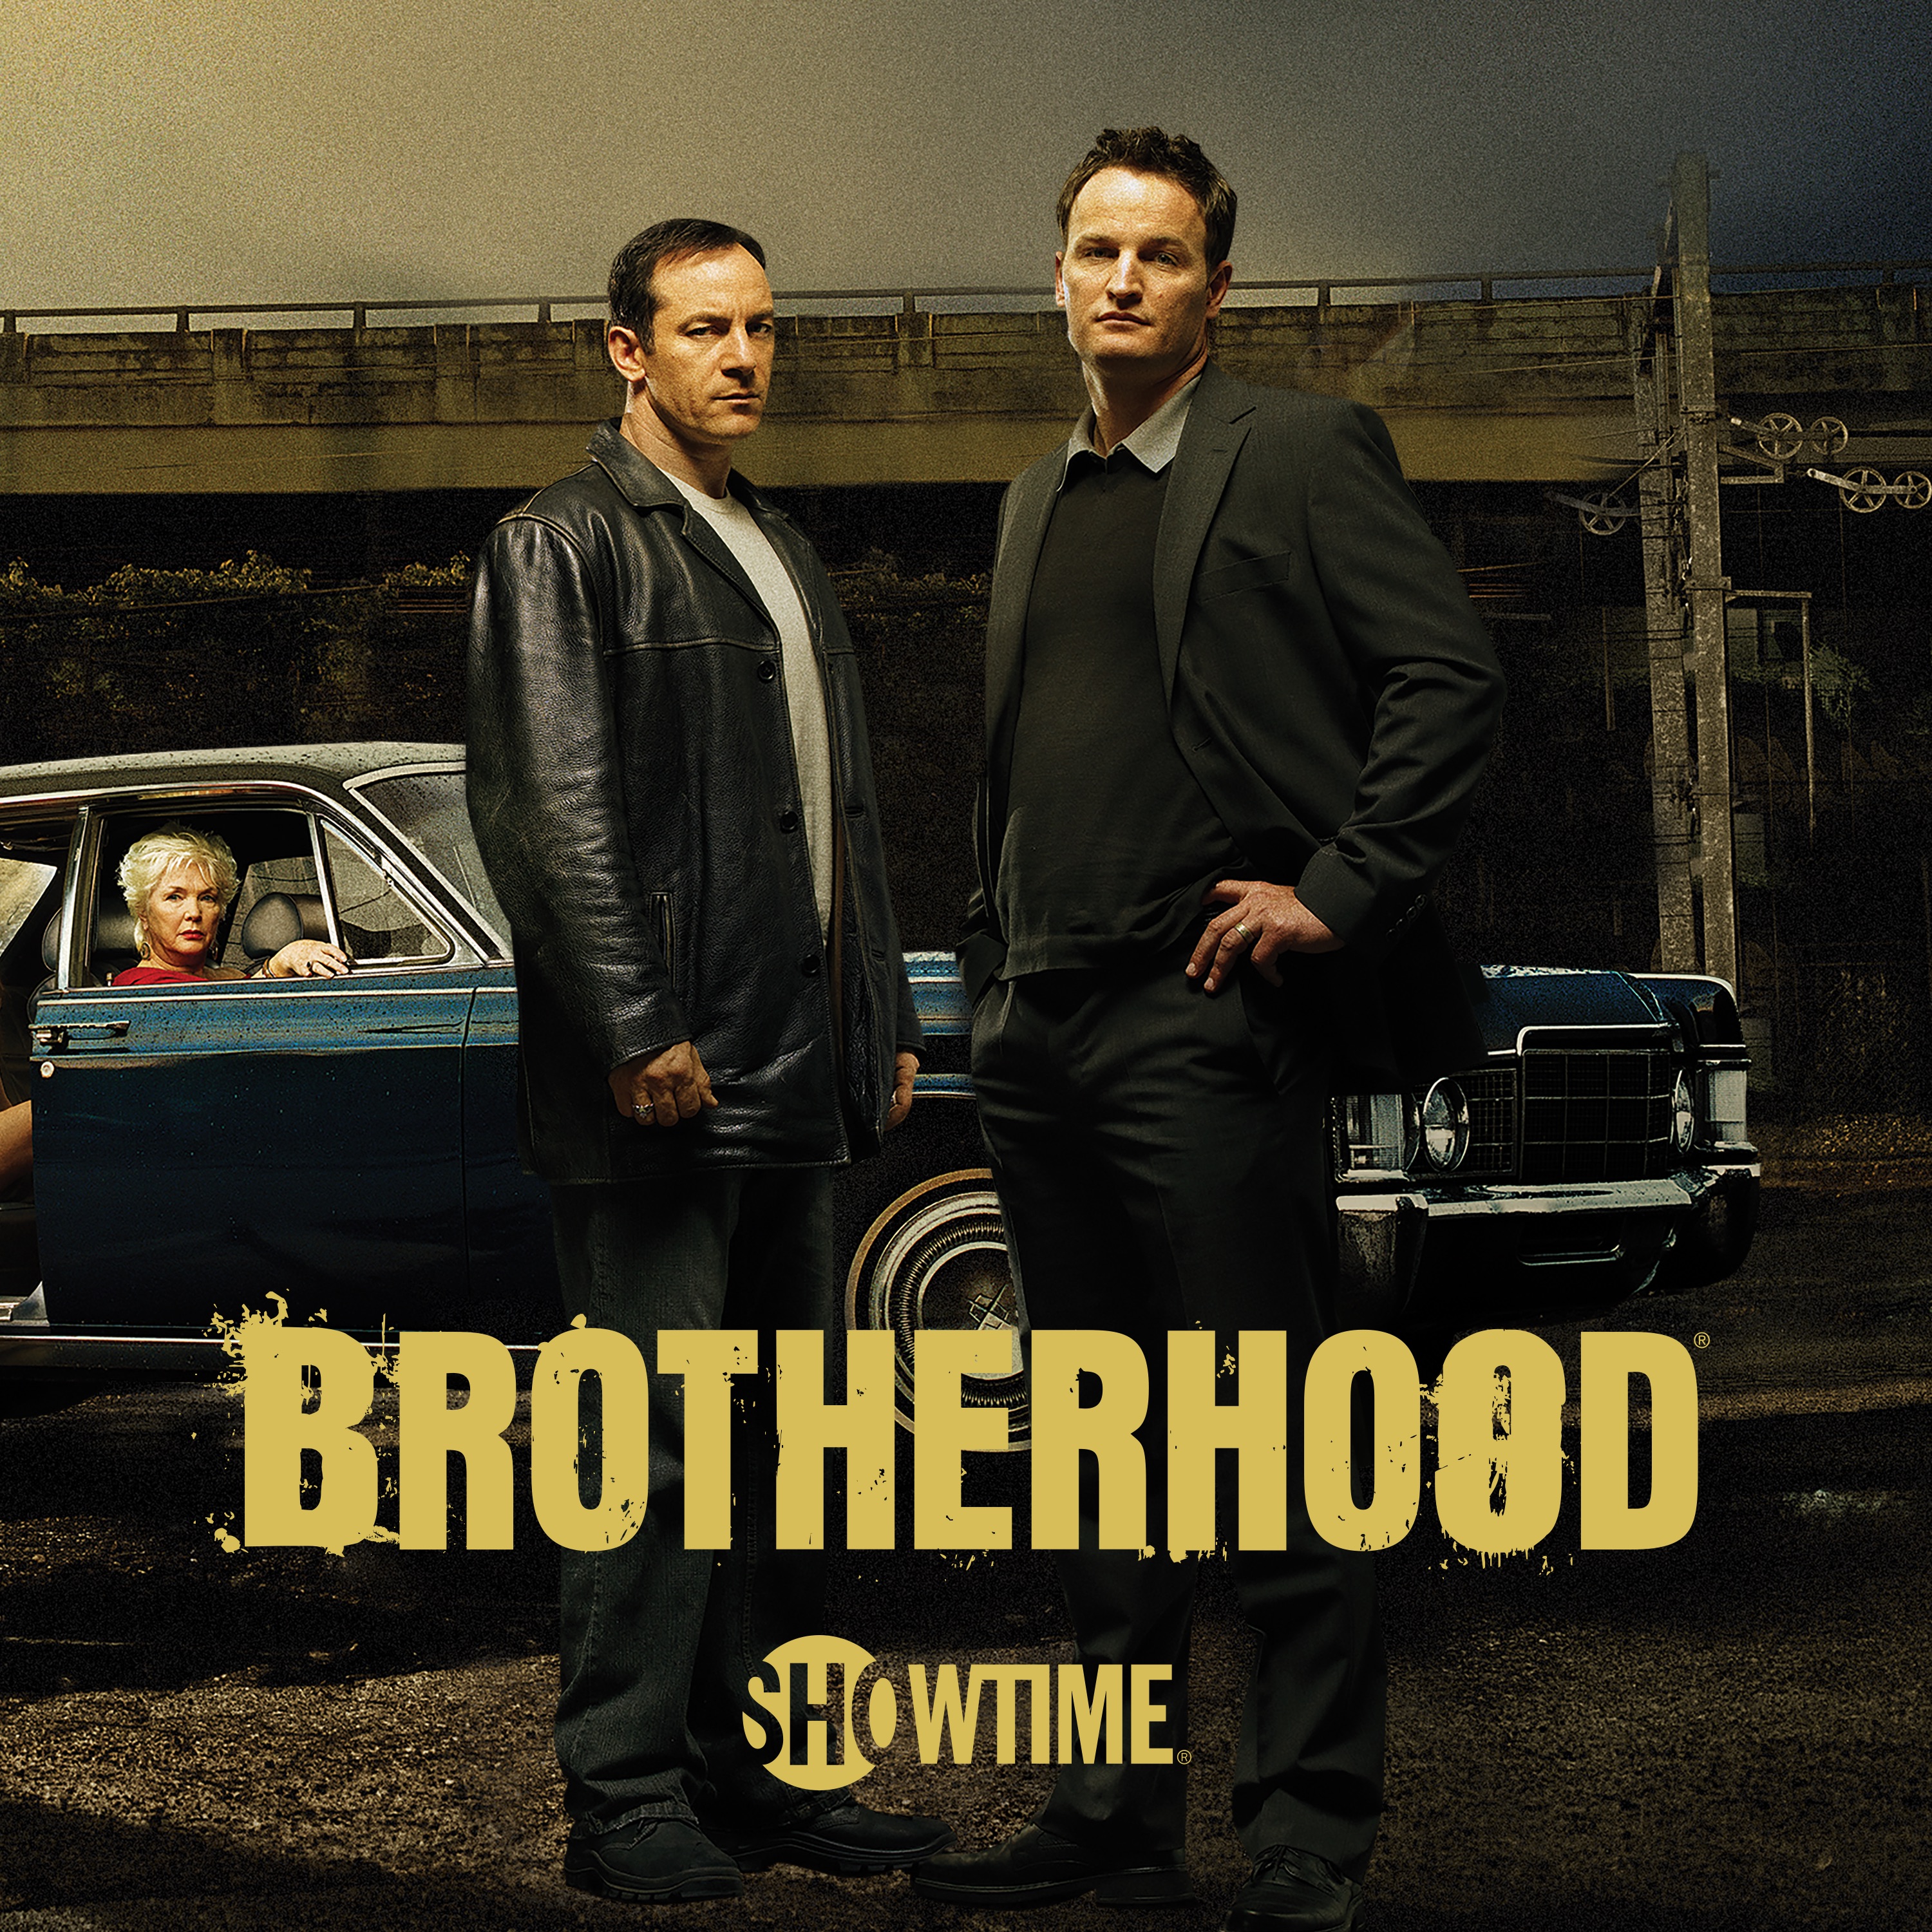 Brotherhood 2016 Full Movie Free Download HD